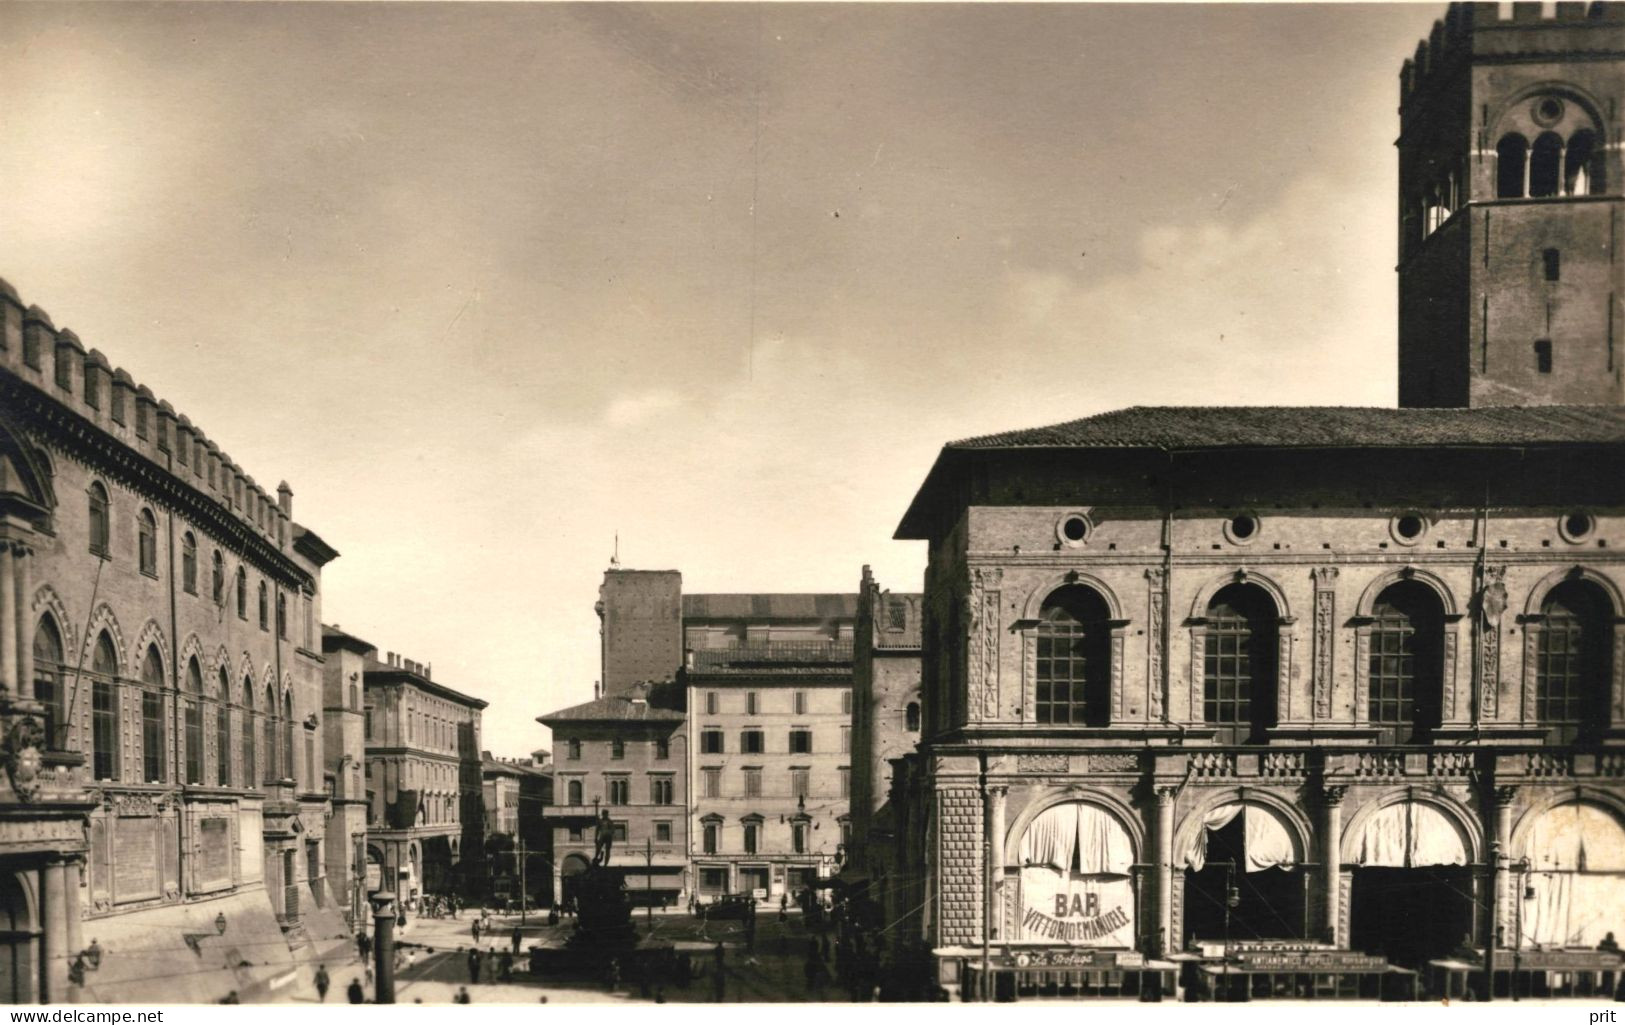 Piazza Vittorio Emanuele Bologna Bar V.Emanuele 1920s Unused Photo Postcard. Publisher Face Bologna - Bologna